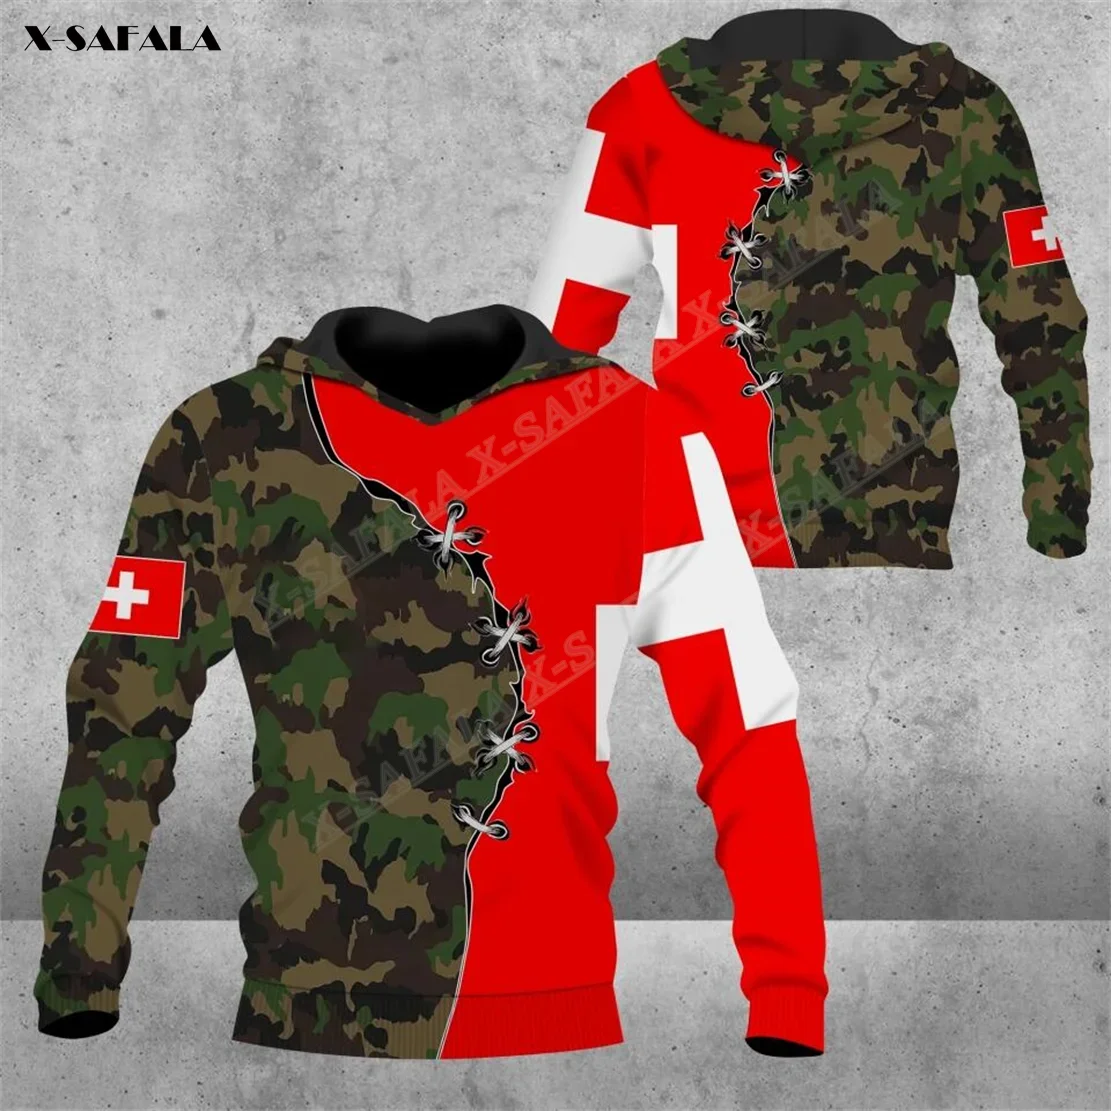 

Swiss Switzerland Army Camo Soldier Flag 3D Print Hoodie Men Shirt Pullover Sweatshirt Hooded Jersey Tracksuits Outwear Coat